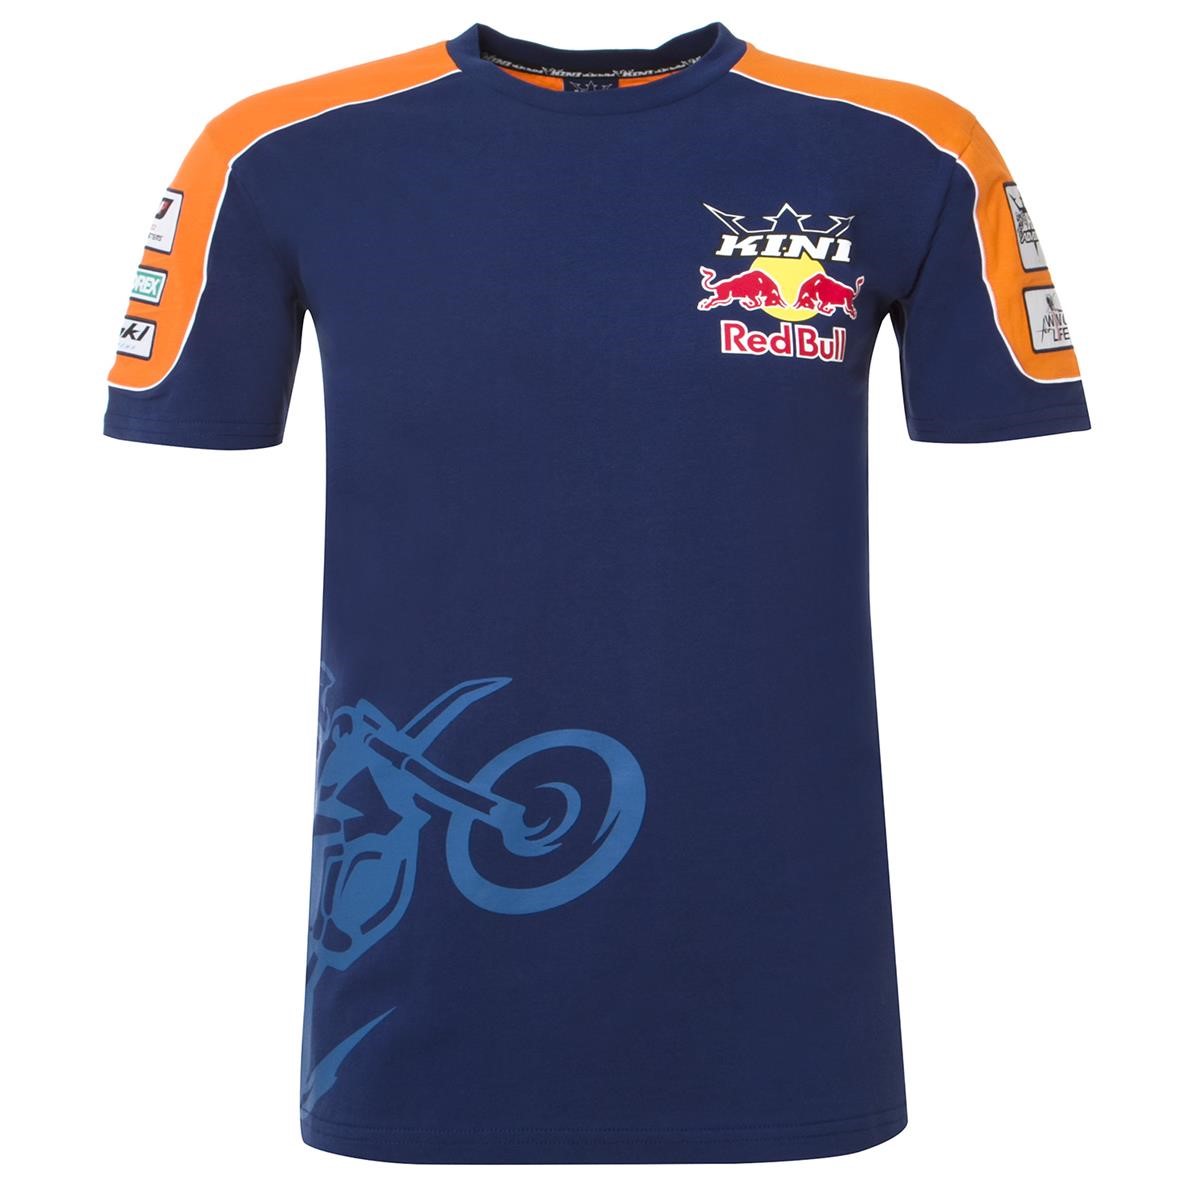 Kini Red Bull T-Shirt Team Orange/Navy